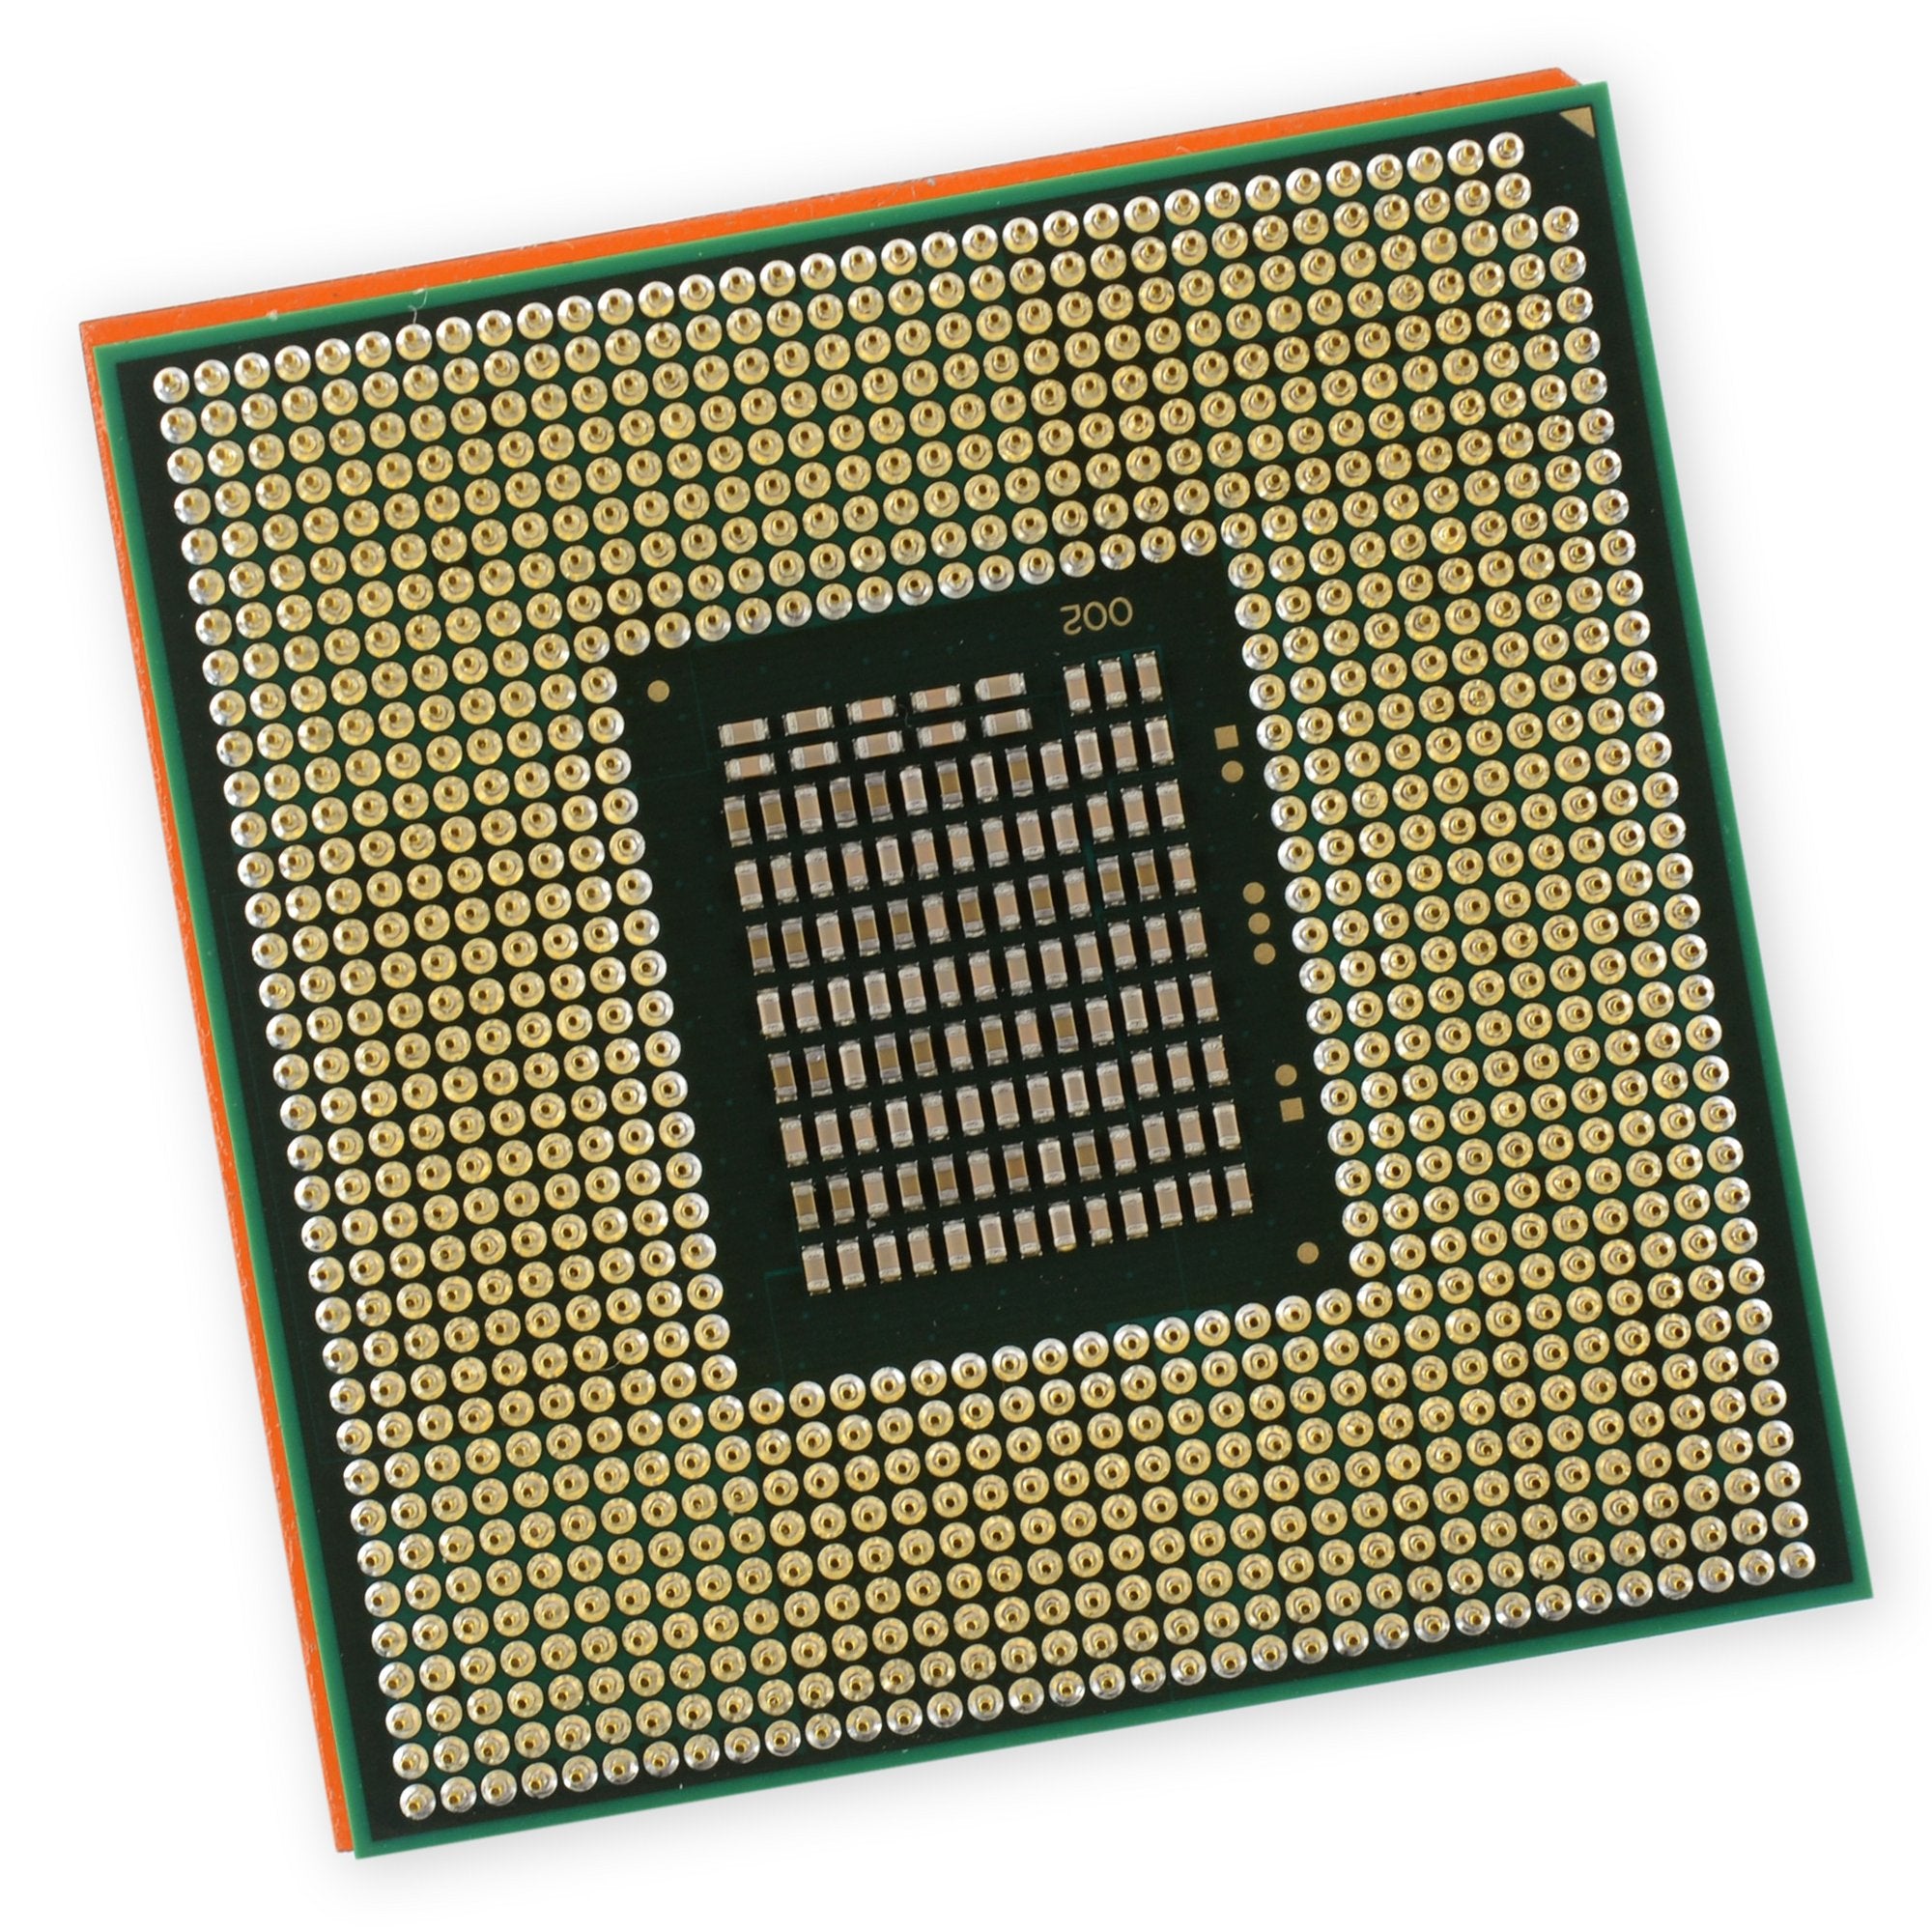 Asus G74SX-BBK8 CPU (i7-2670QM)